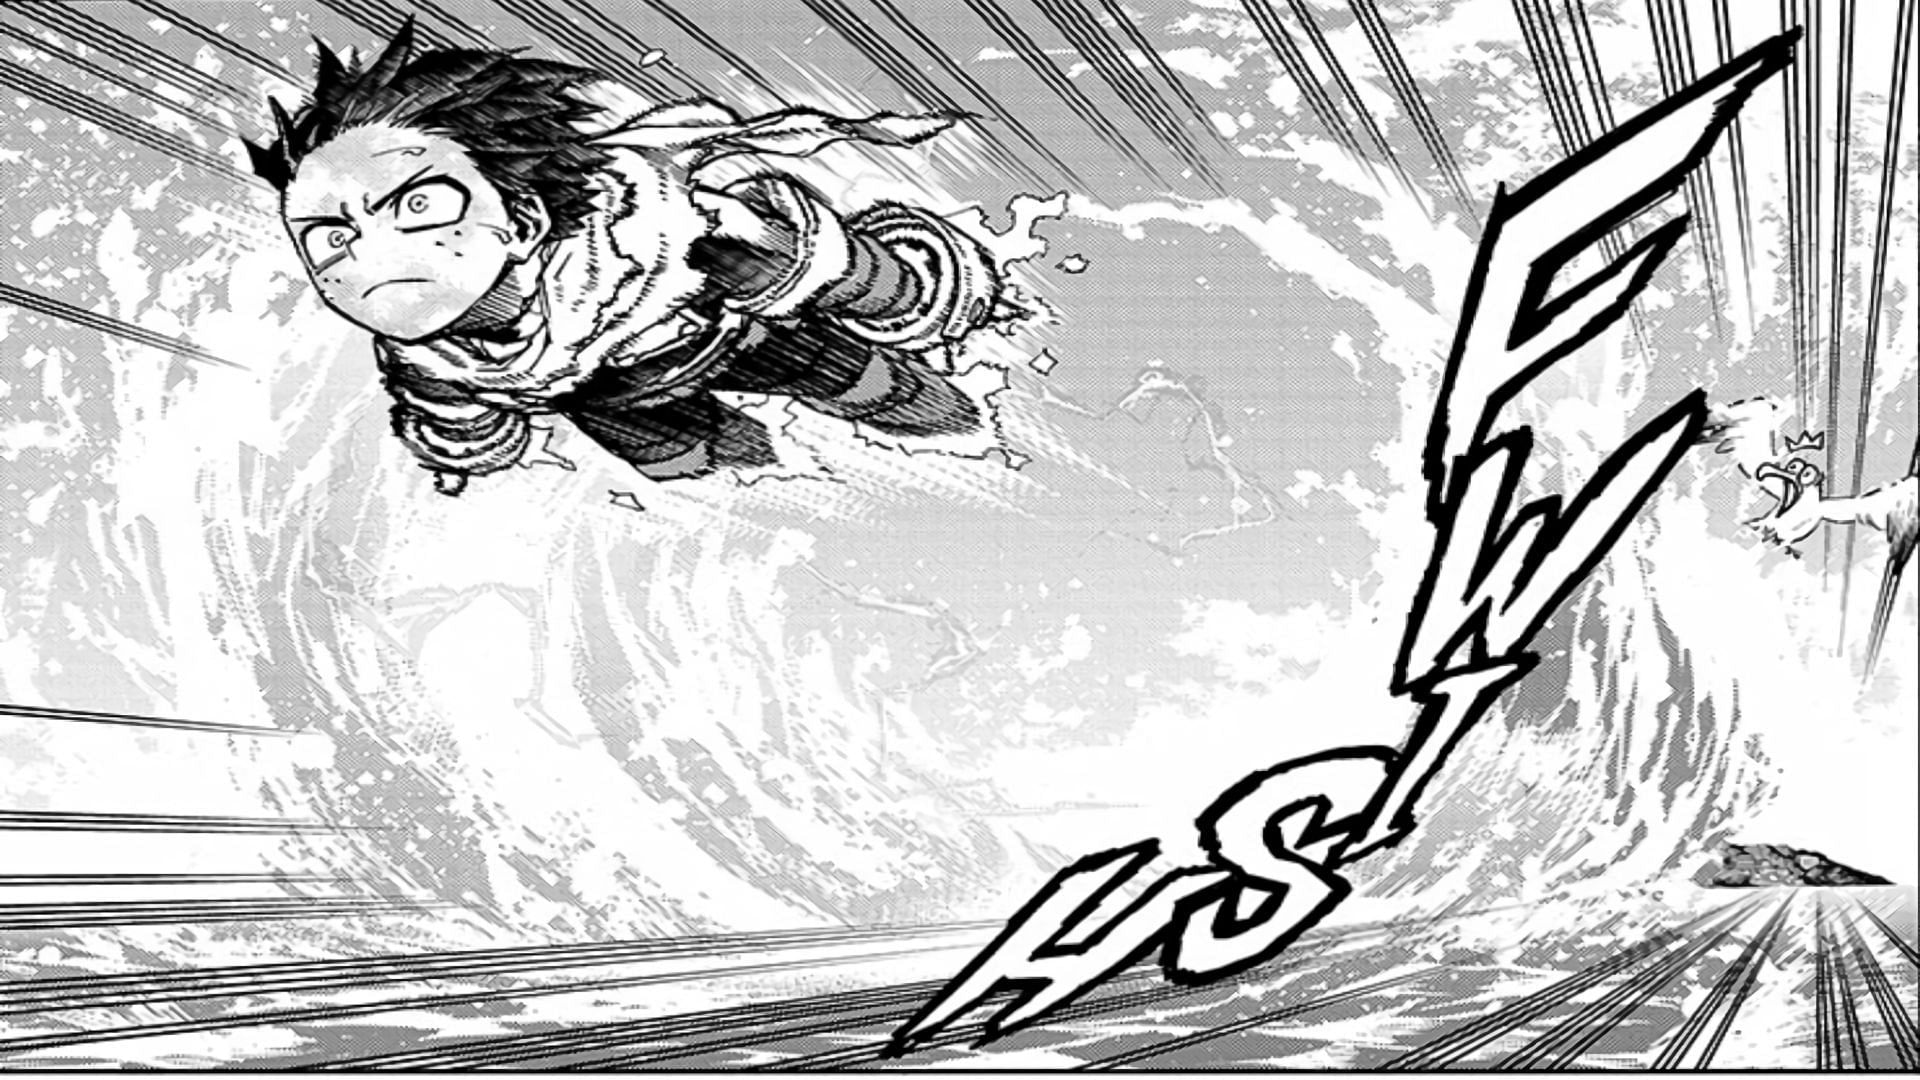 Deku flying in the My Hero Academia manga (Image via Shueisha)